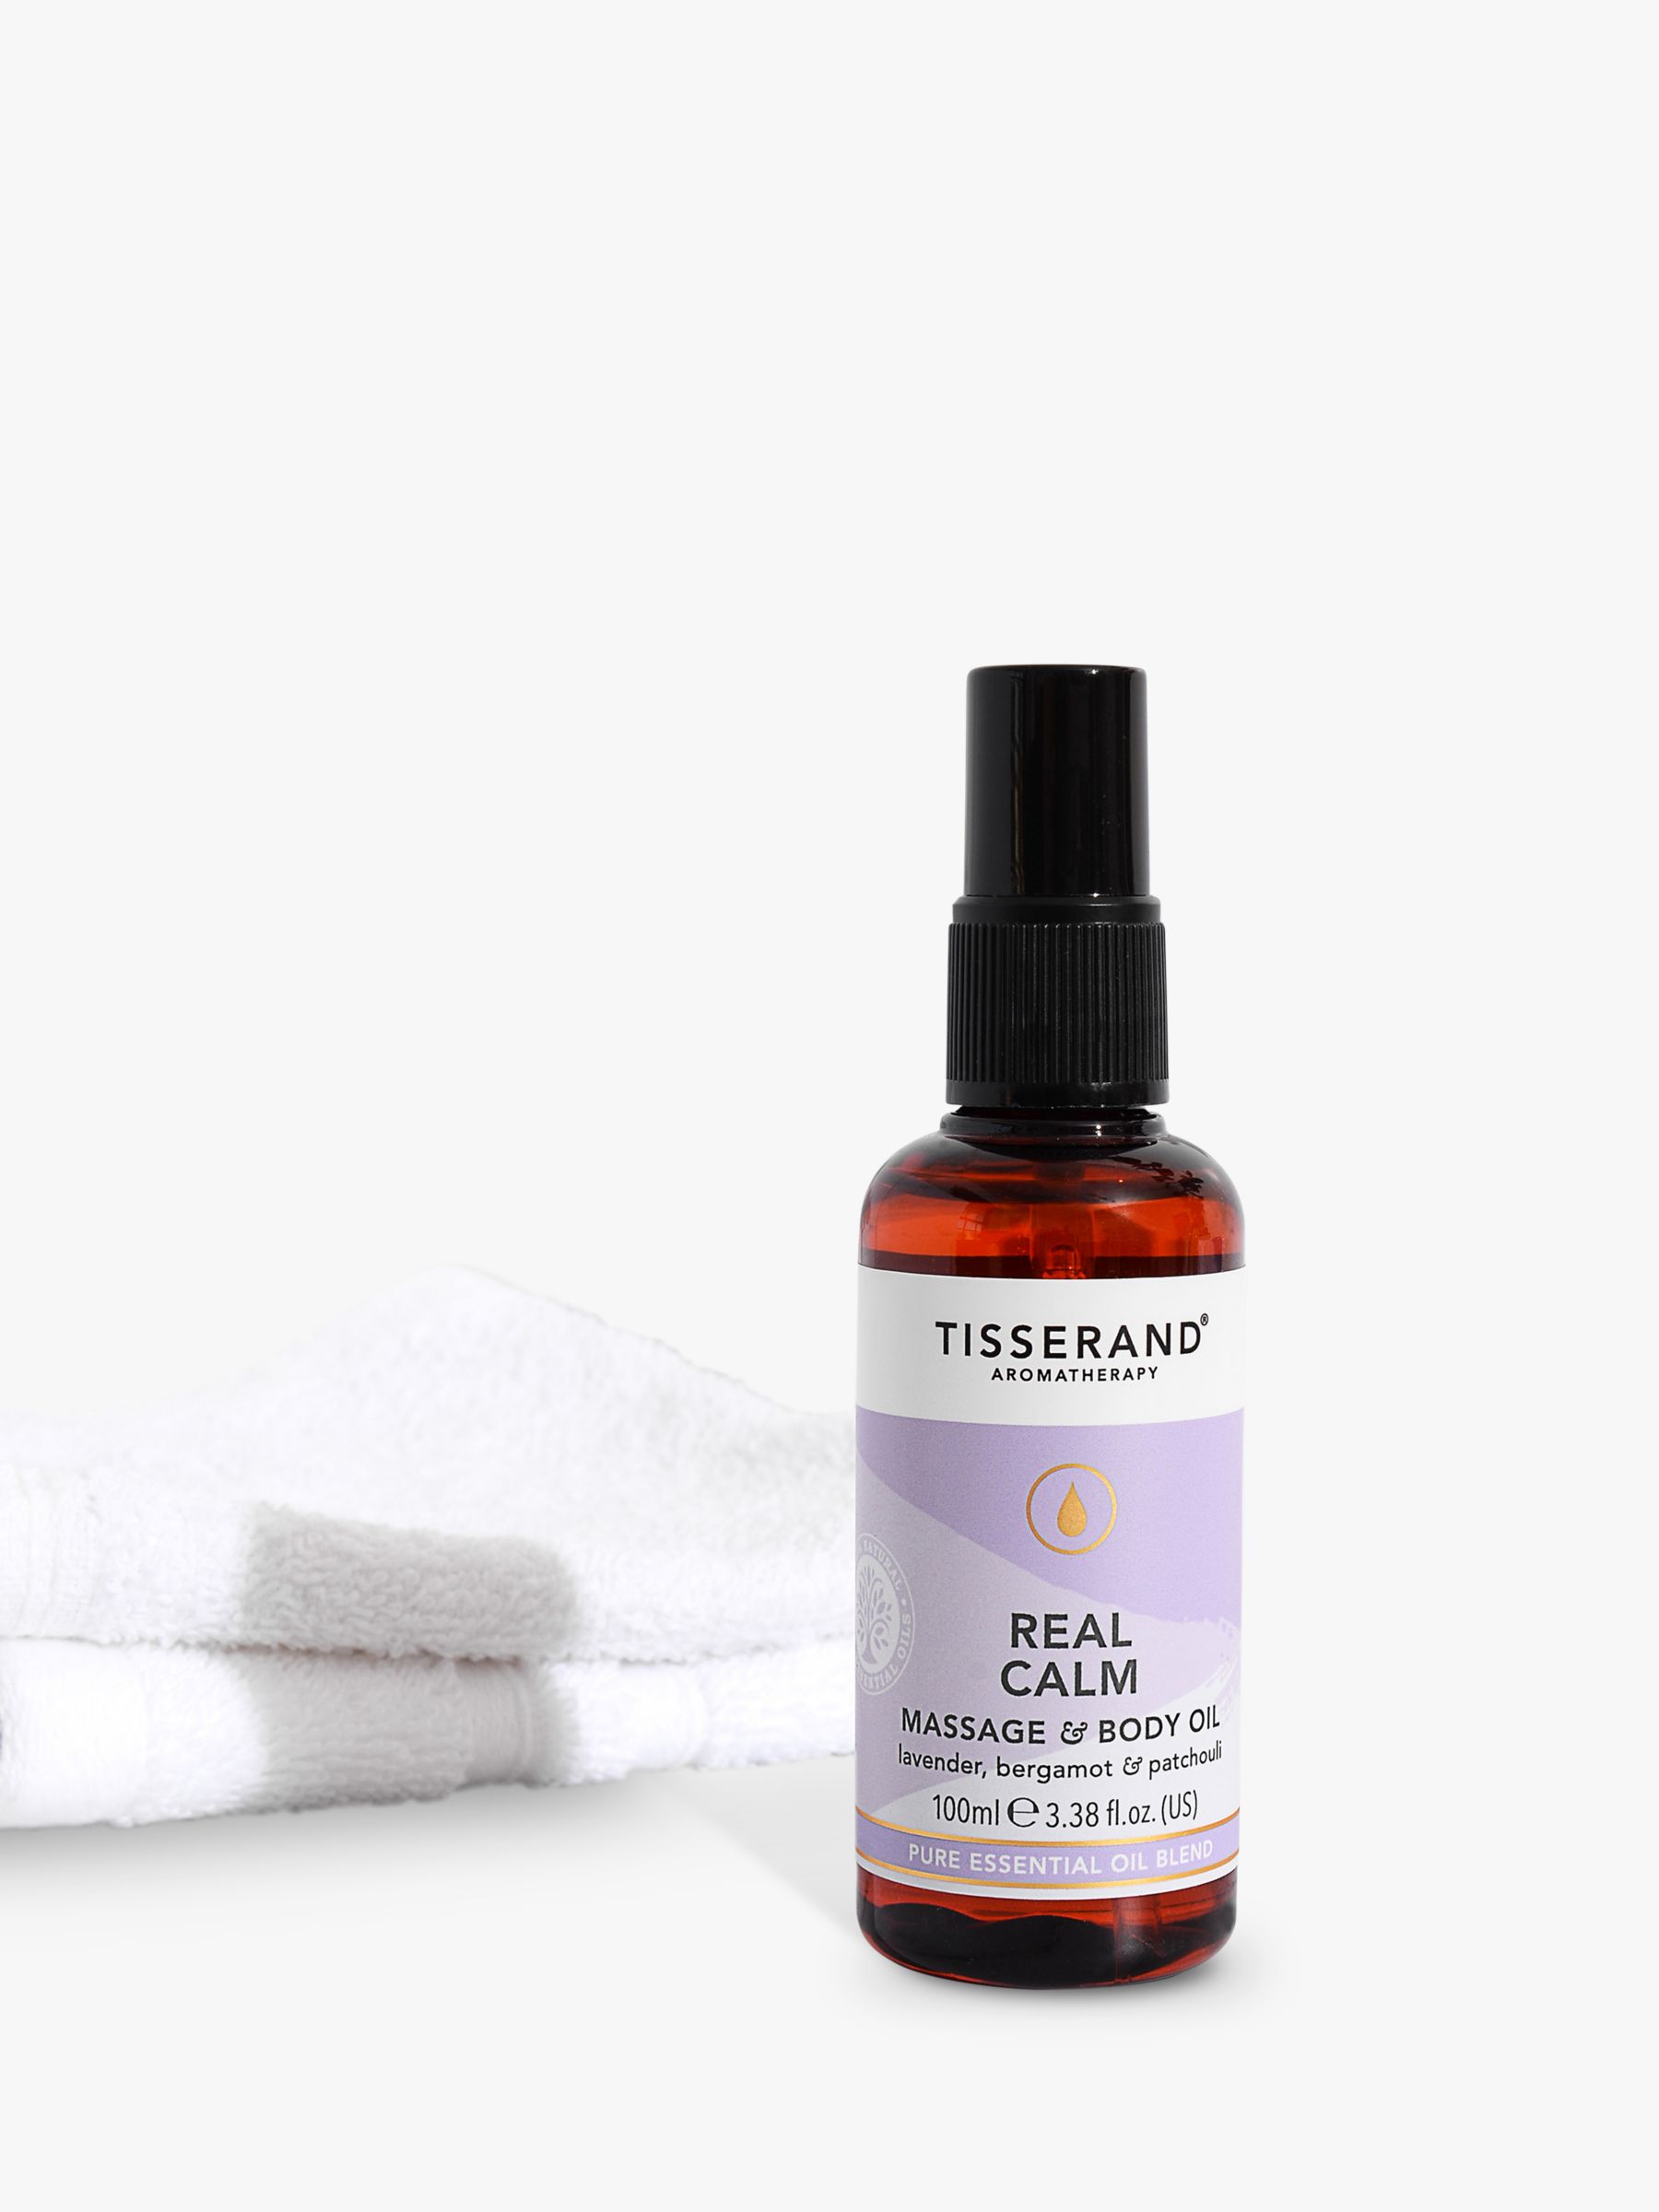 Tisserand Aromatherapy Real Calm Massage & Body Oil, 100ml 1